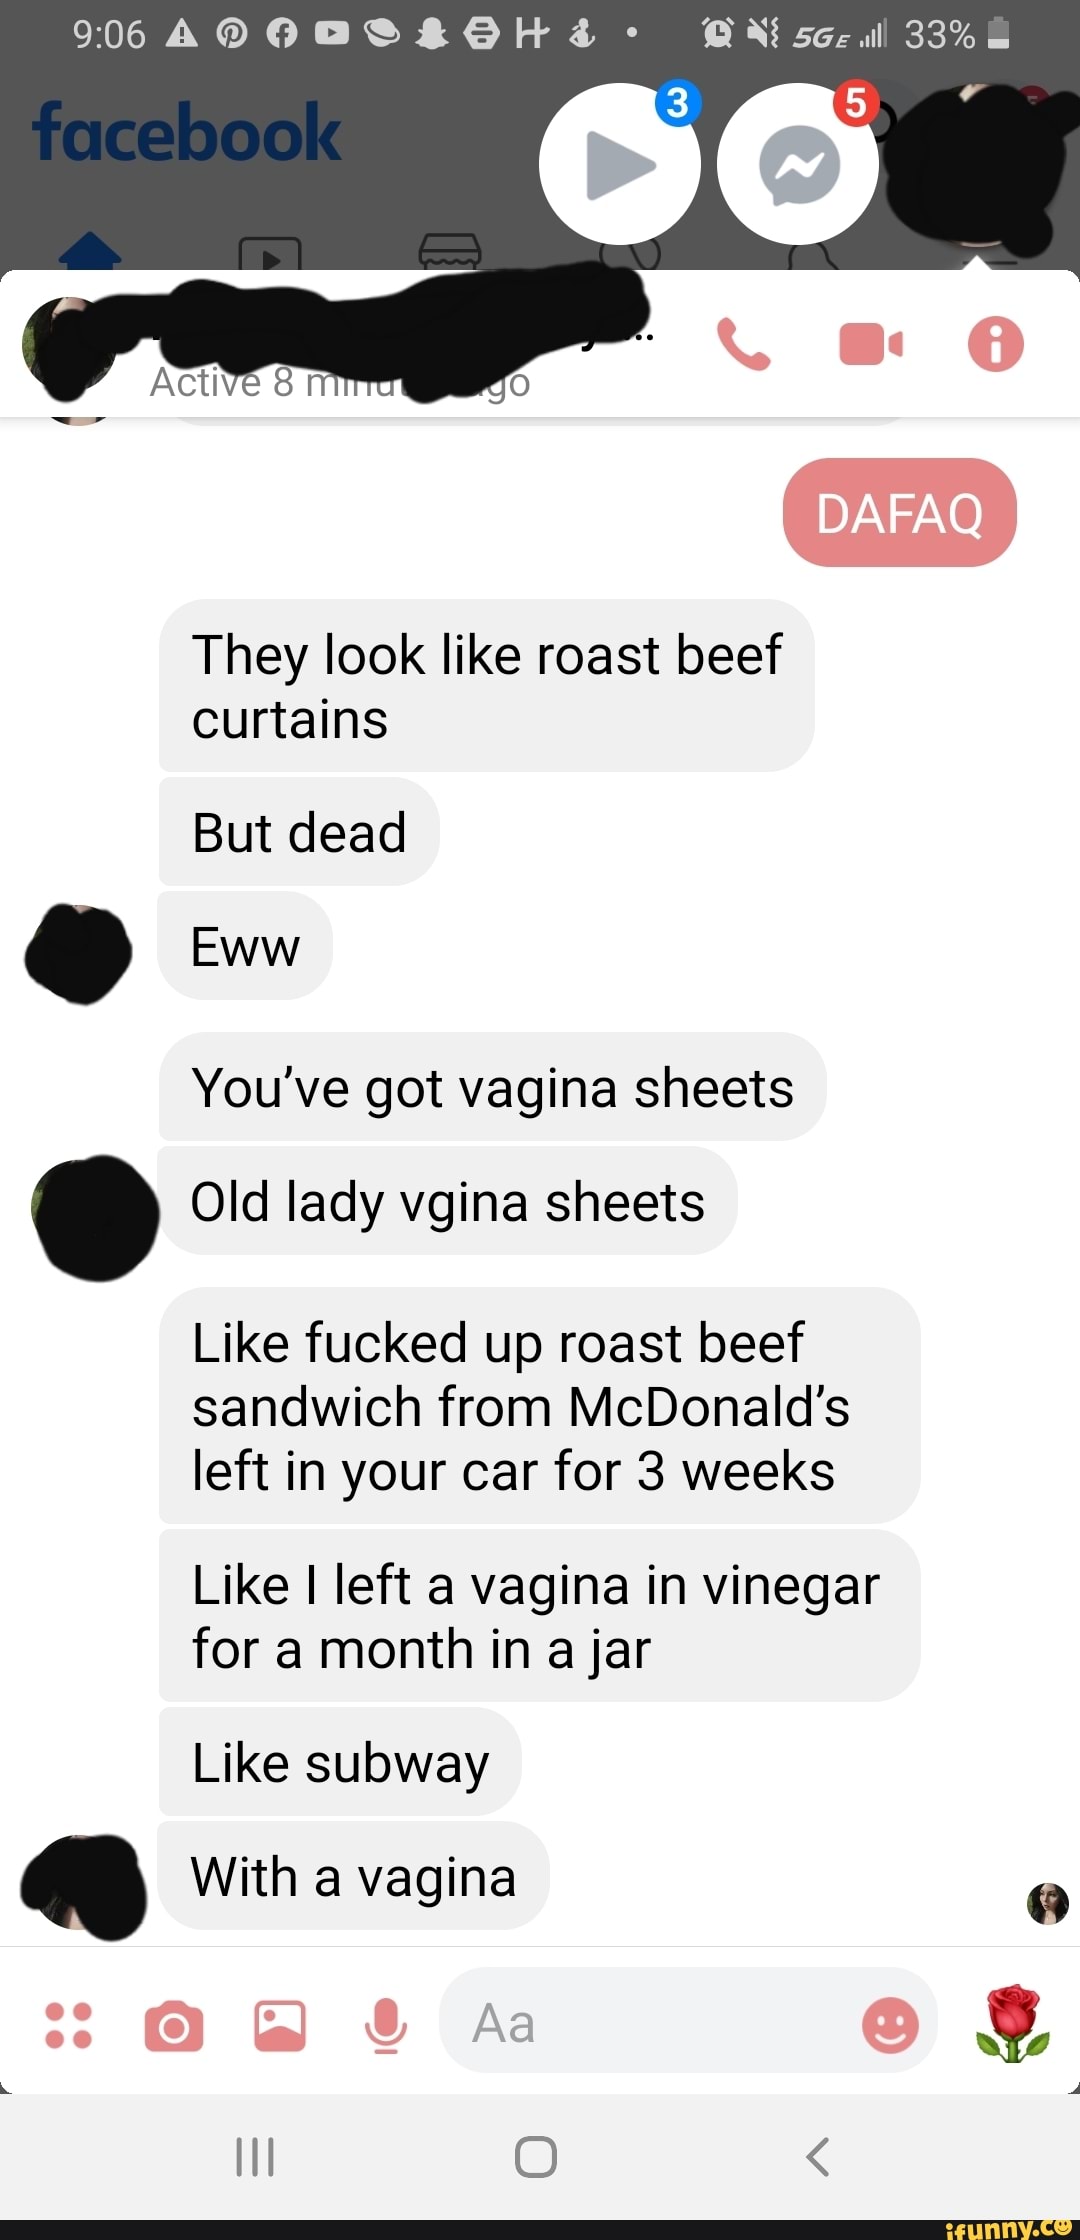 david joseph frazier add roast beef vagina pics photo